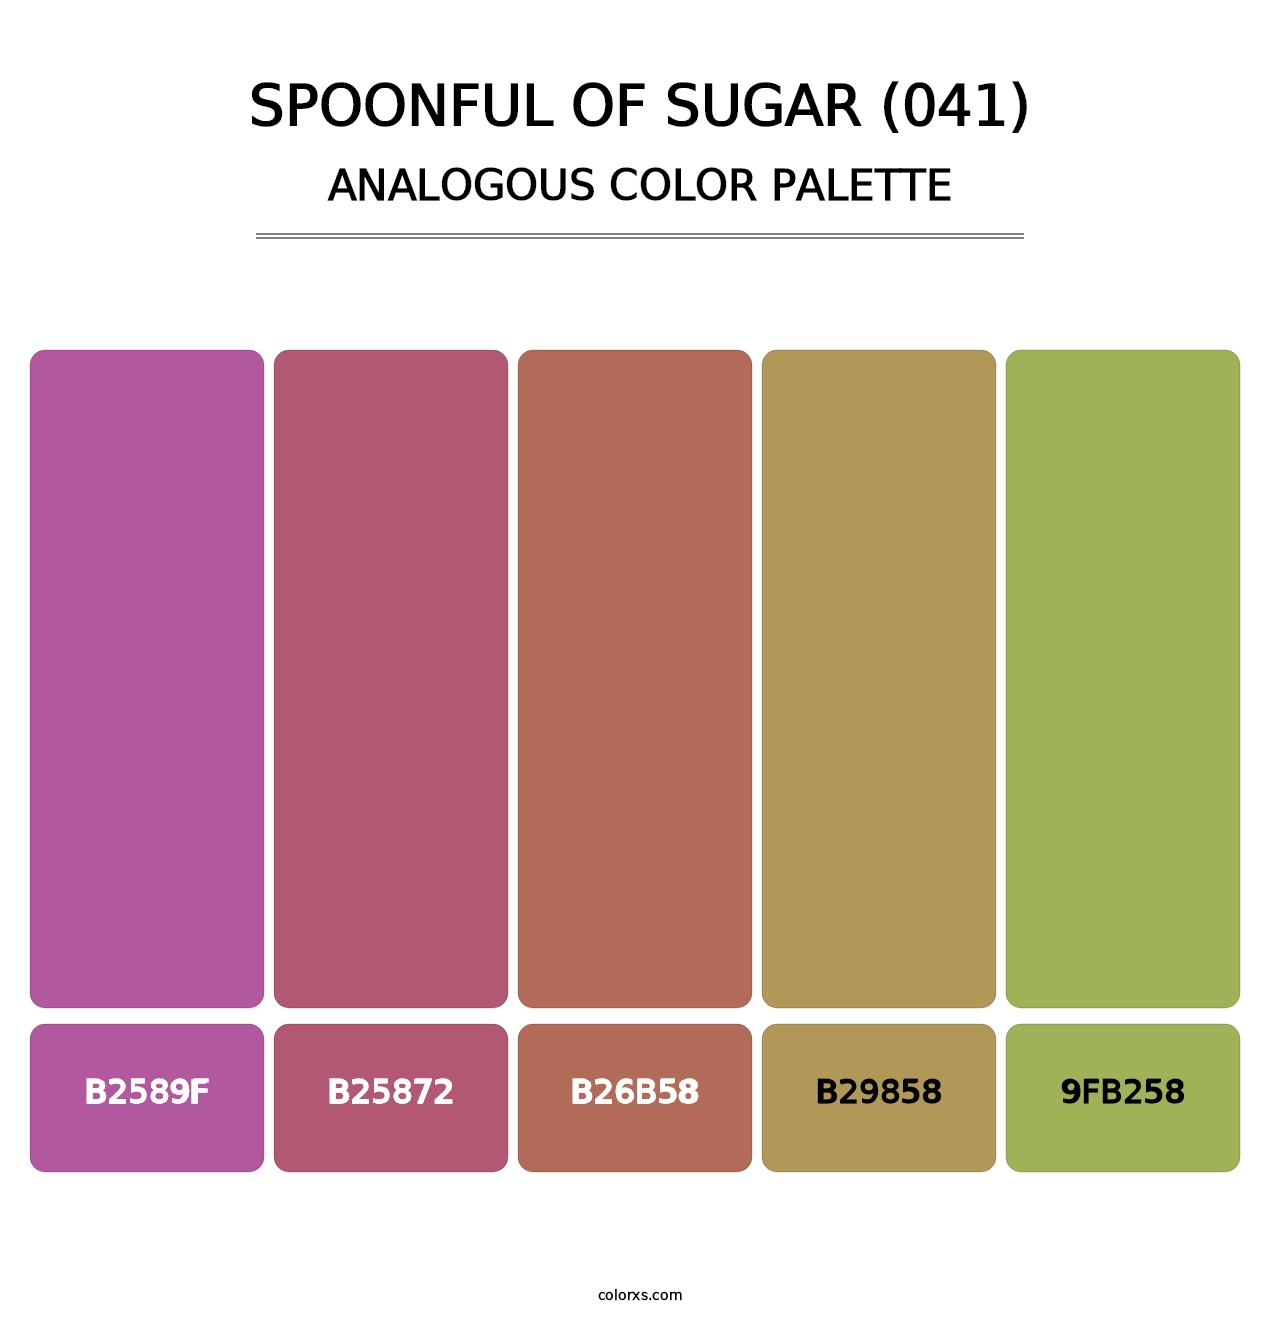 Spoonful of Sugar (041) - Analogous Color Palette